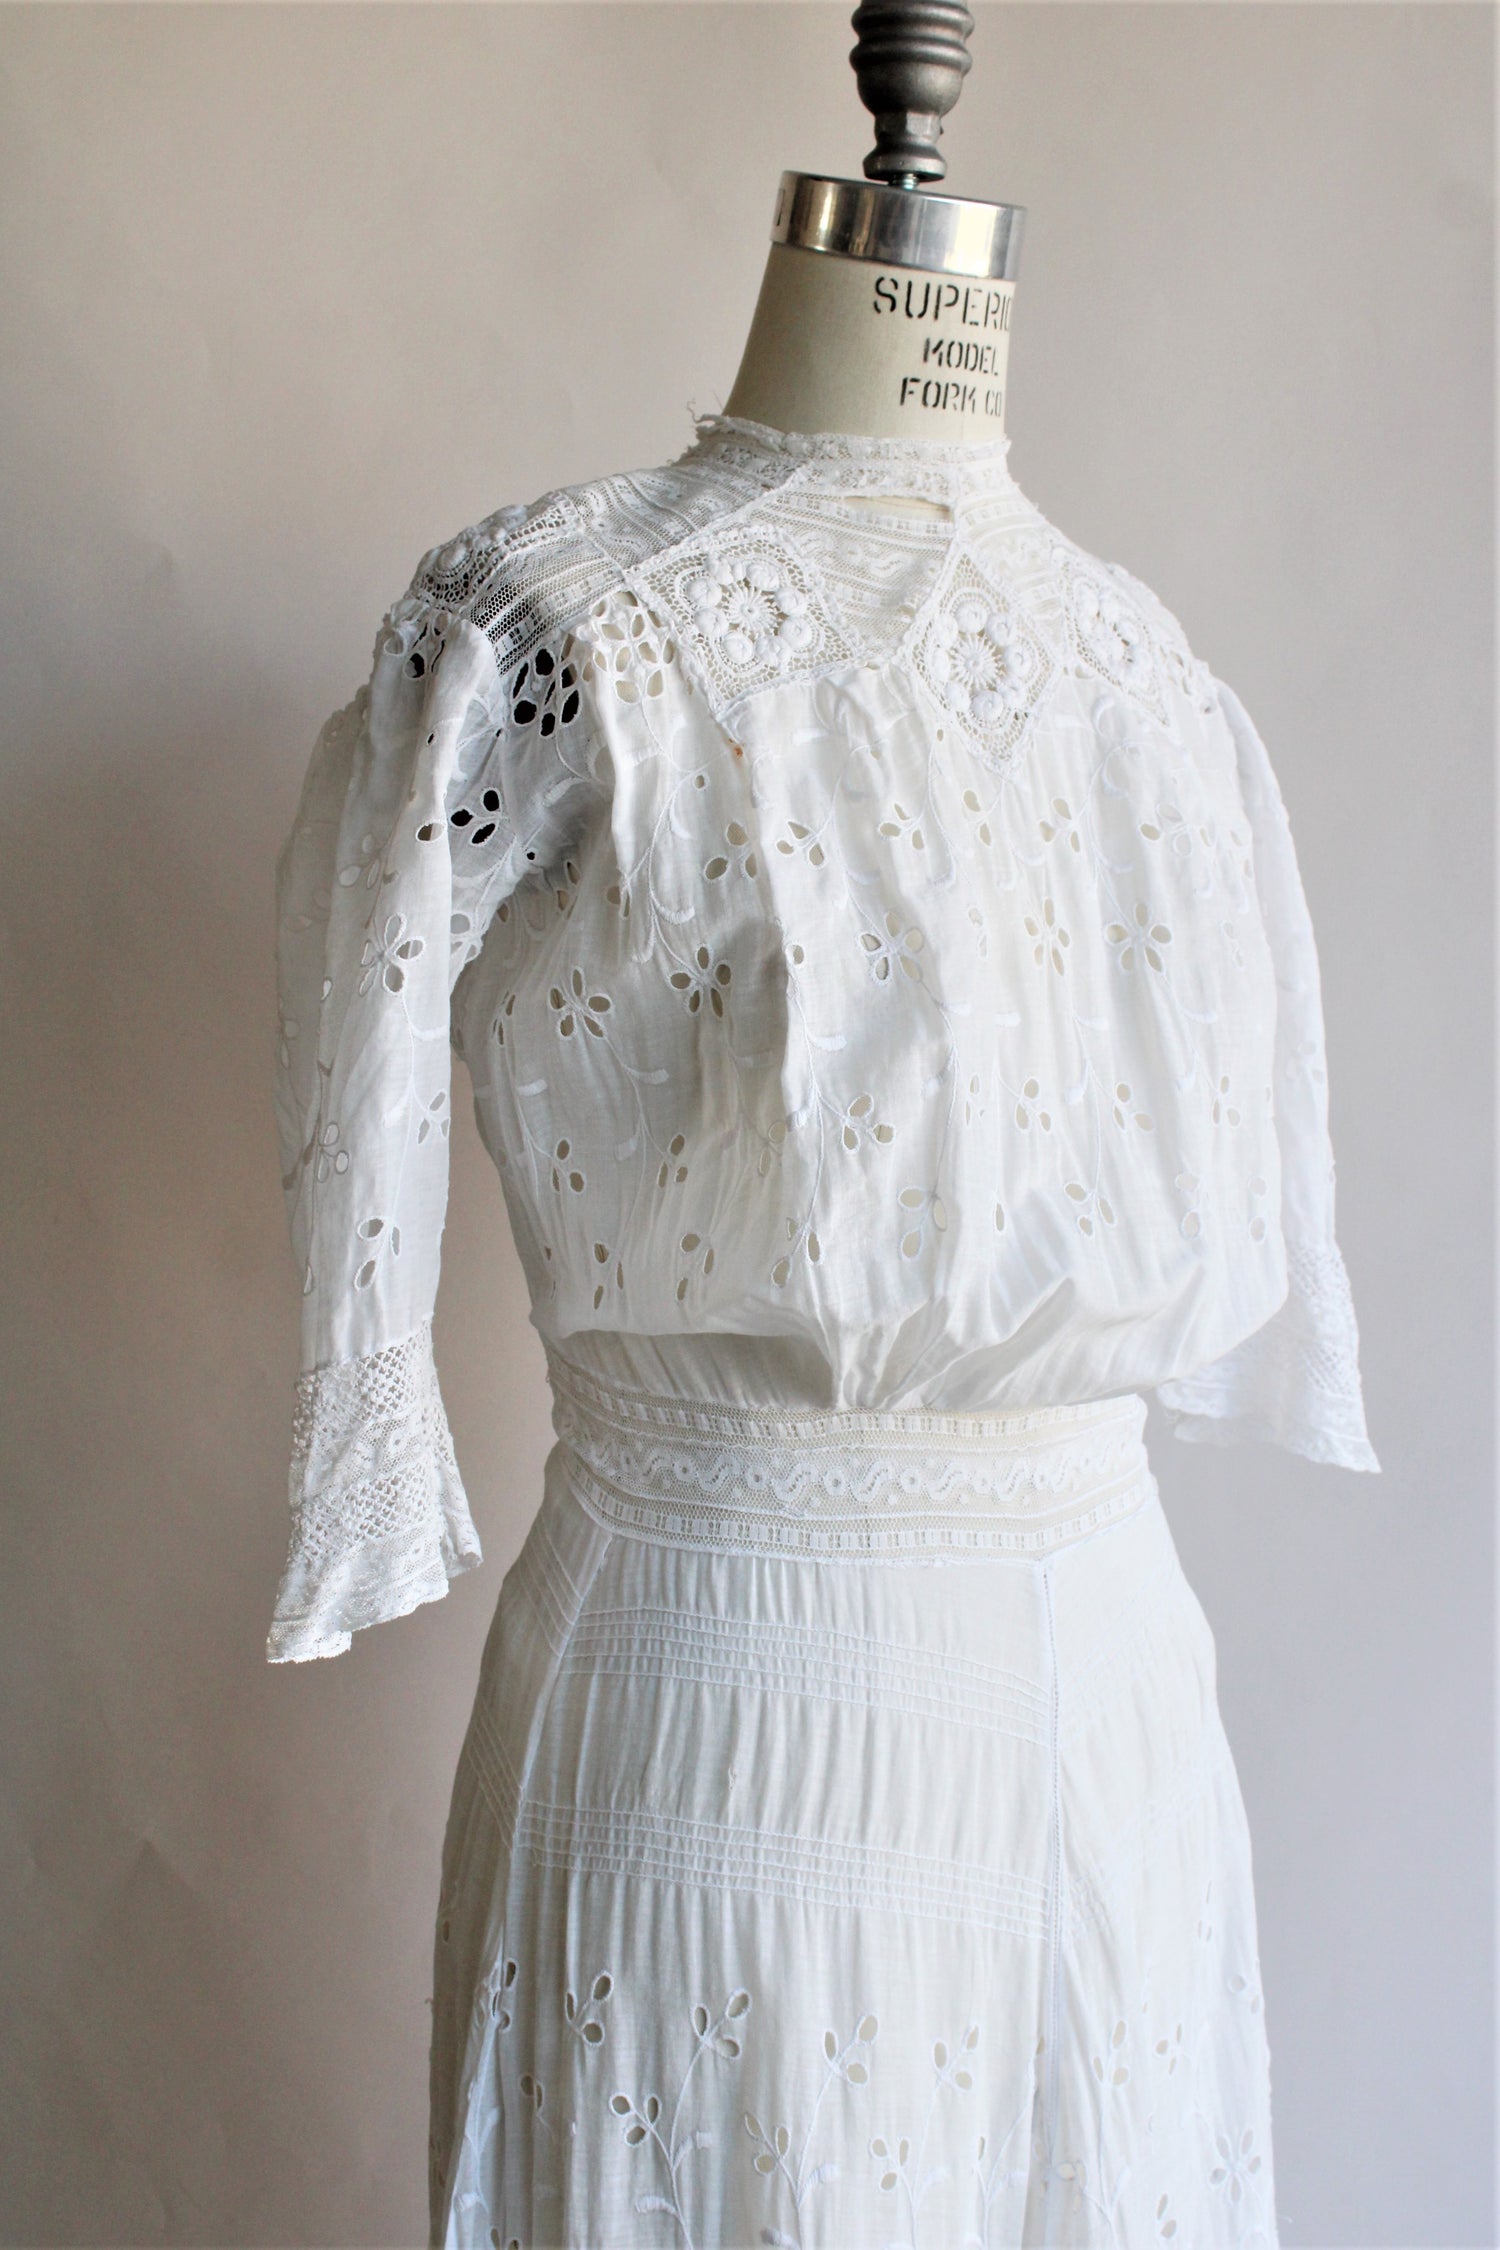 Vintage Antique 1900s Edwardian White Dress